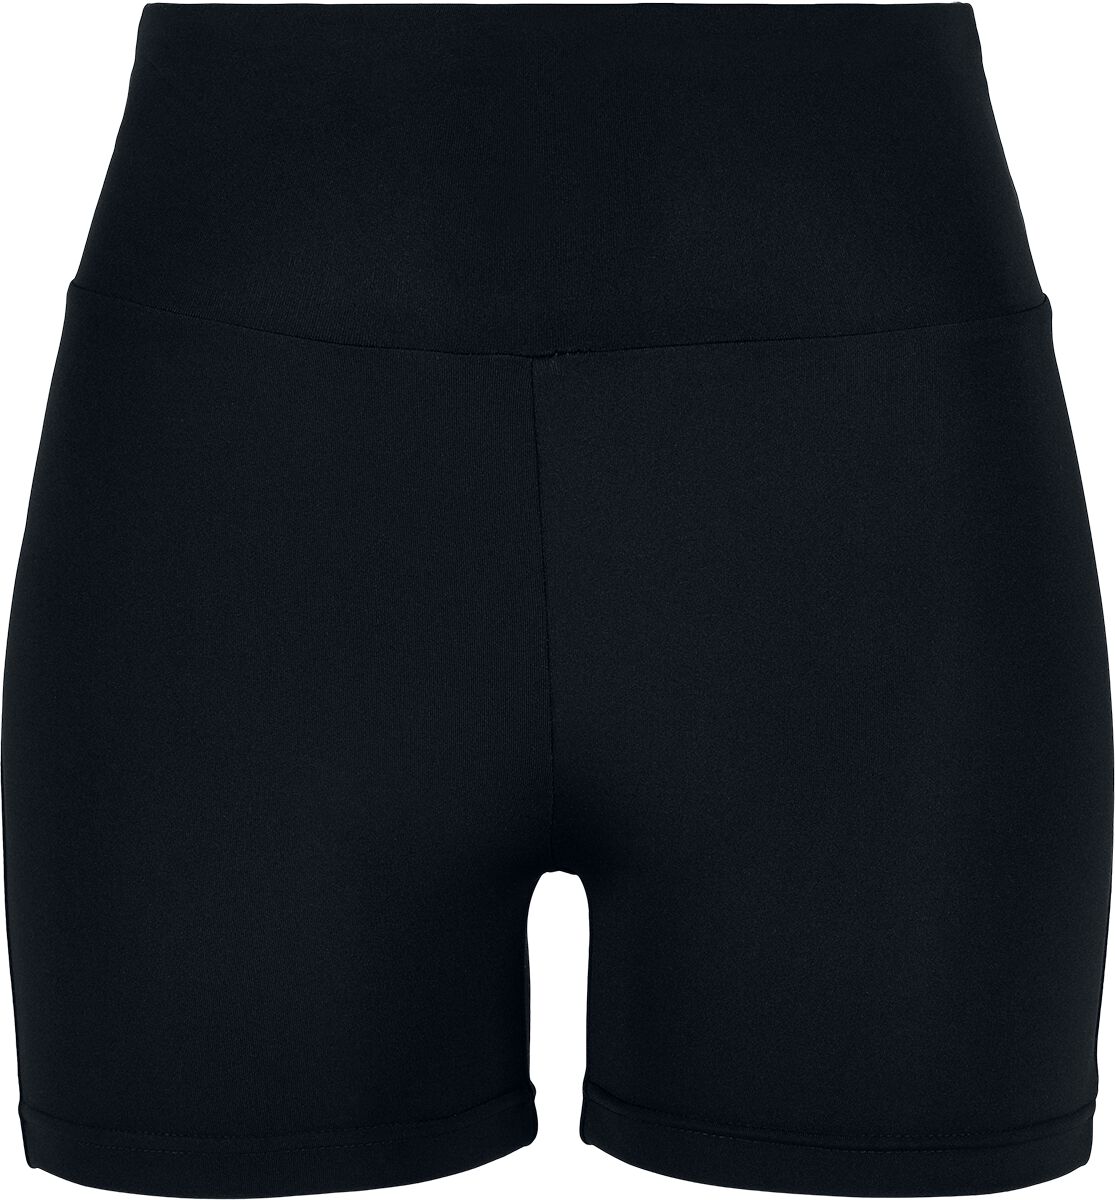 Urban Classics Hotpant - Ladies Recycled High Waist Cycle Hot Pants - XS bis XL - für Damen - Größe XL - schwarz